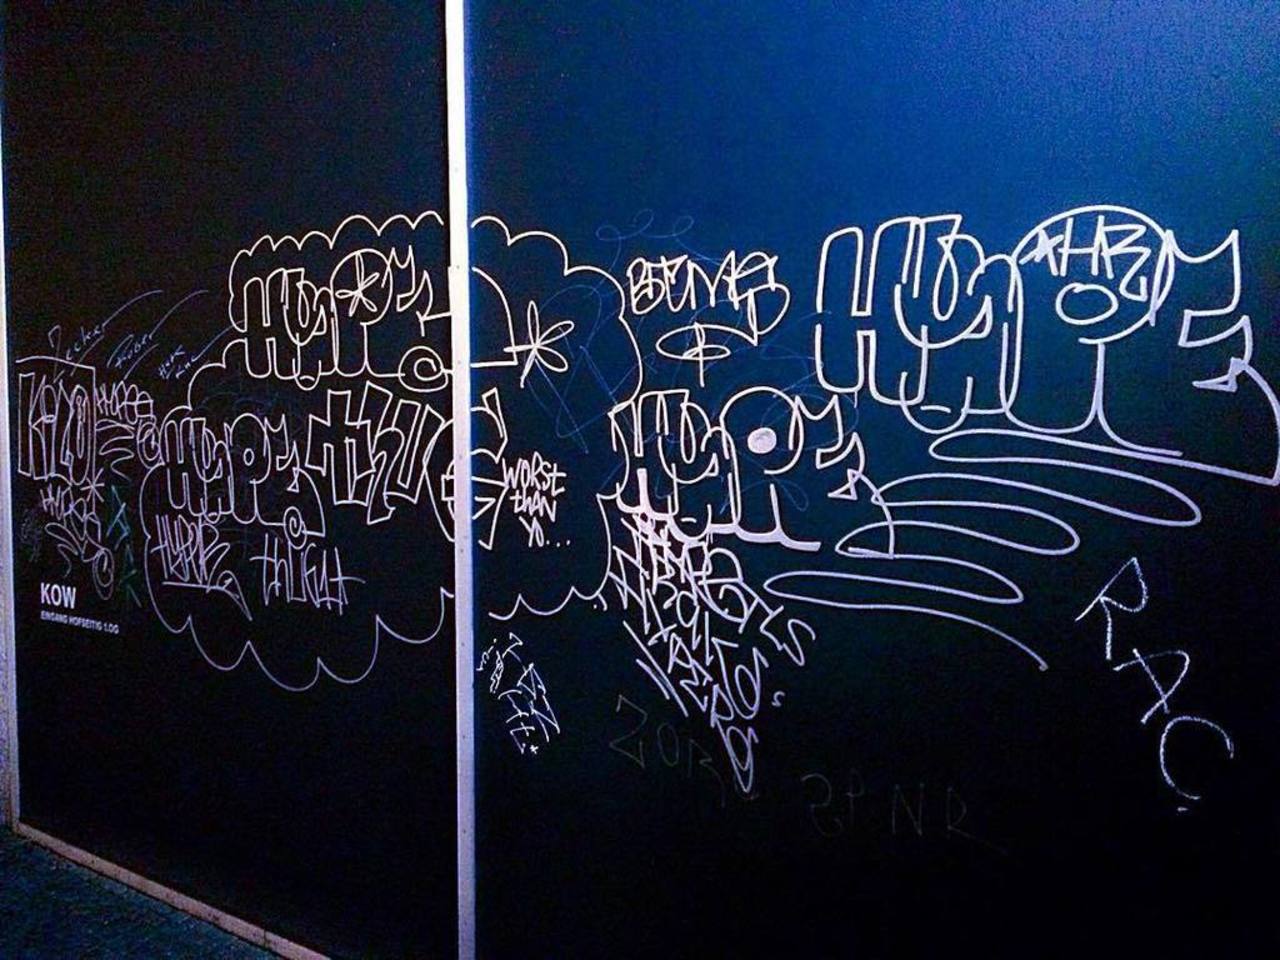 RT @artpushr: via #paparazzi1101 "http://bit.ly/1jS2iPY" #graffiti #streetart http://t.co/lC5n9HmRlC